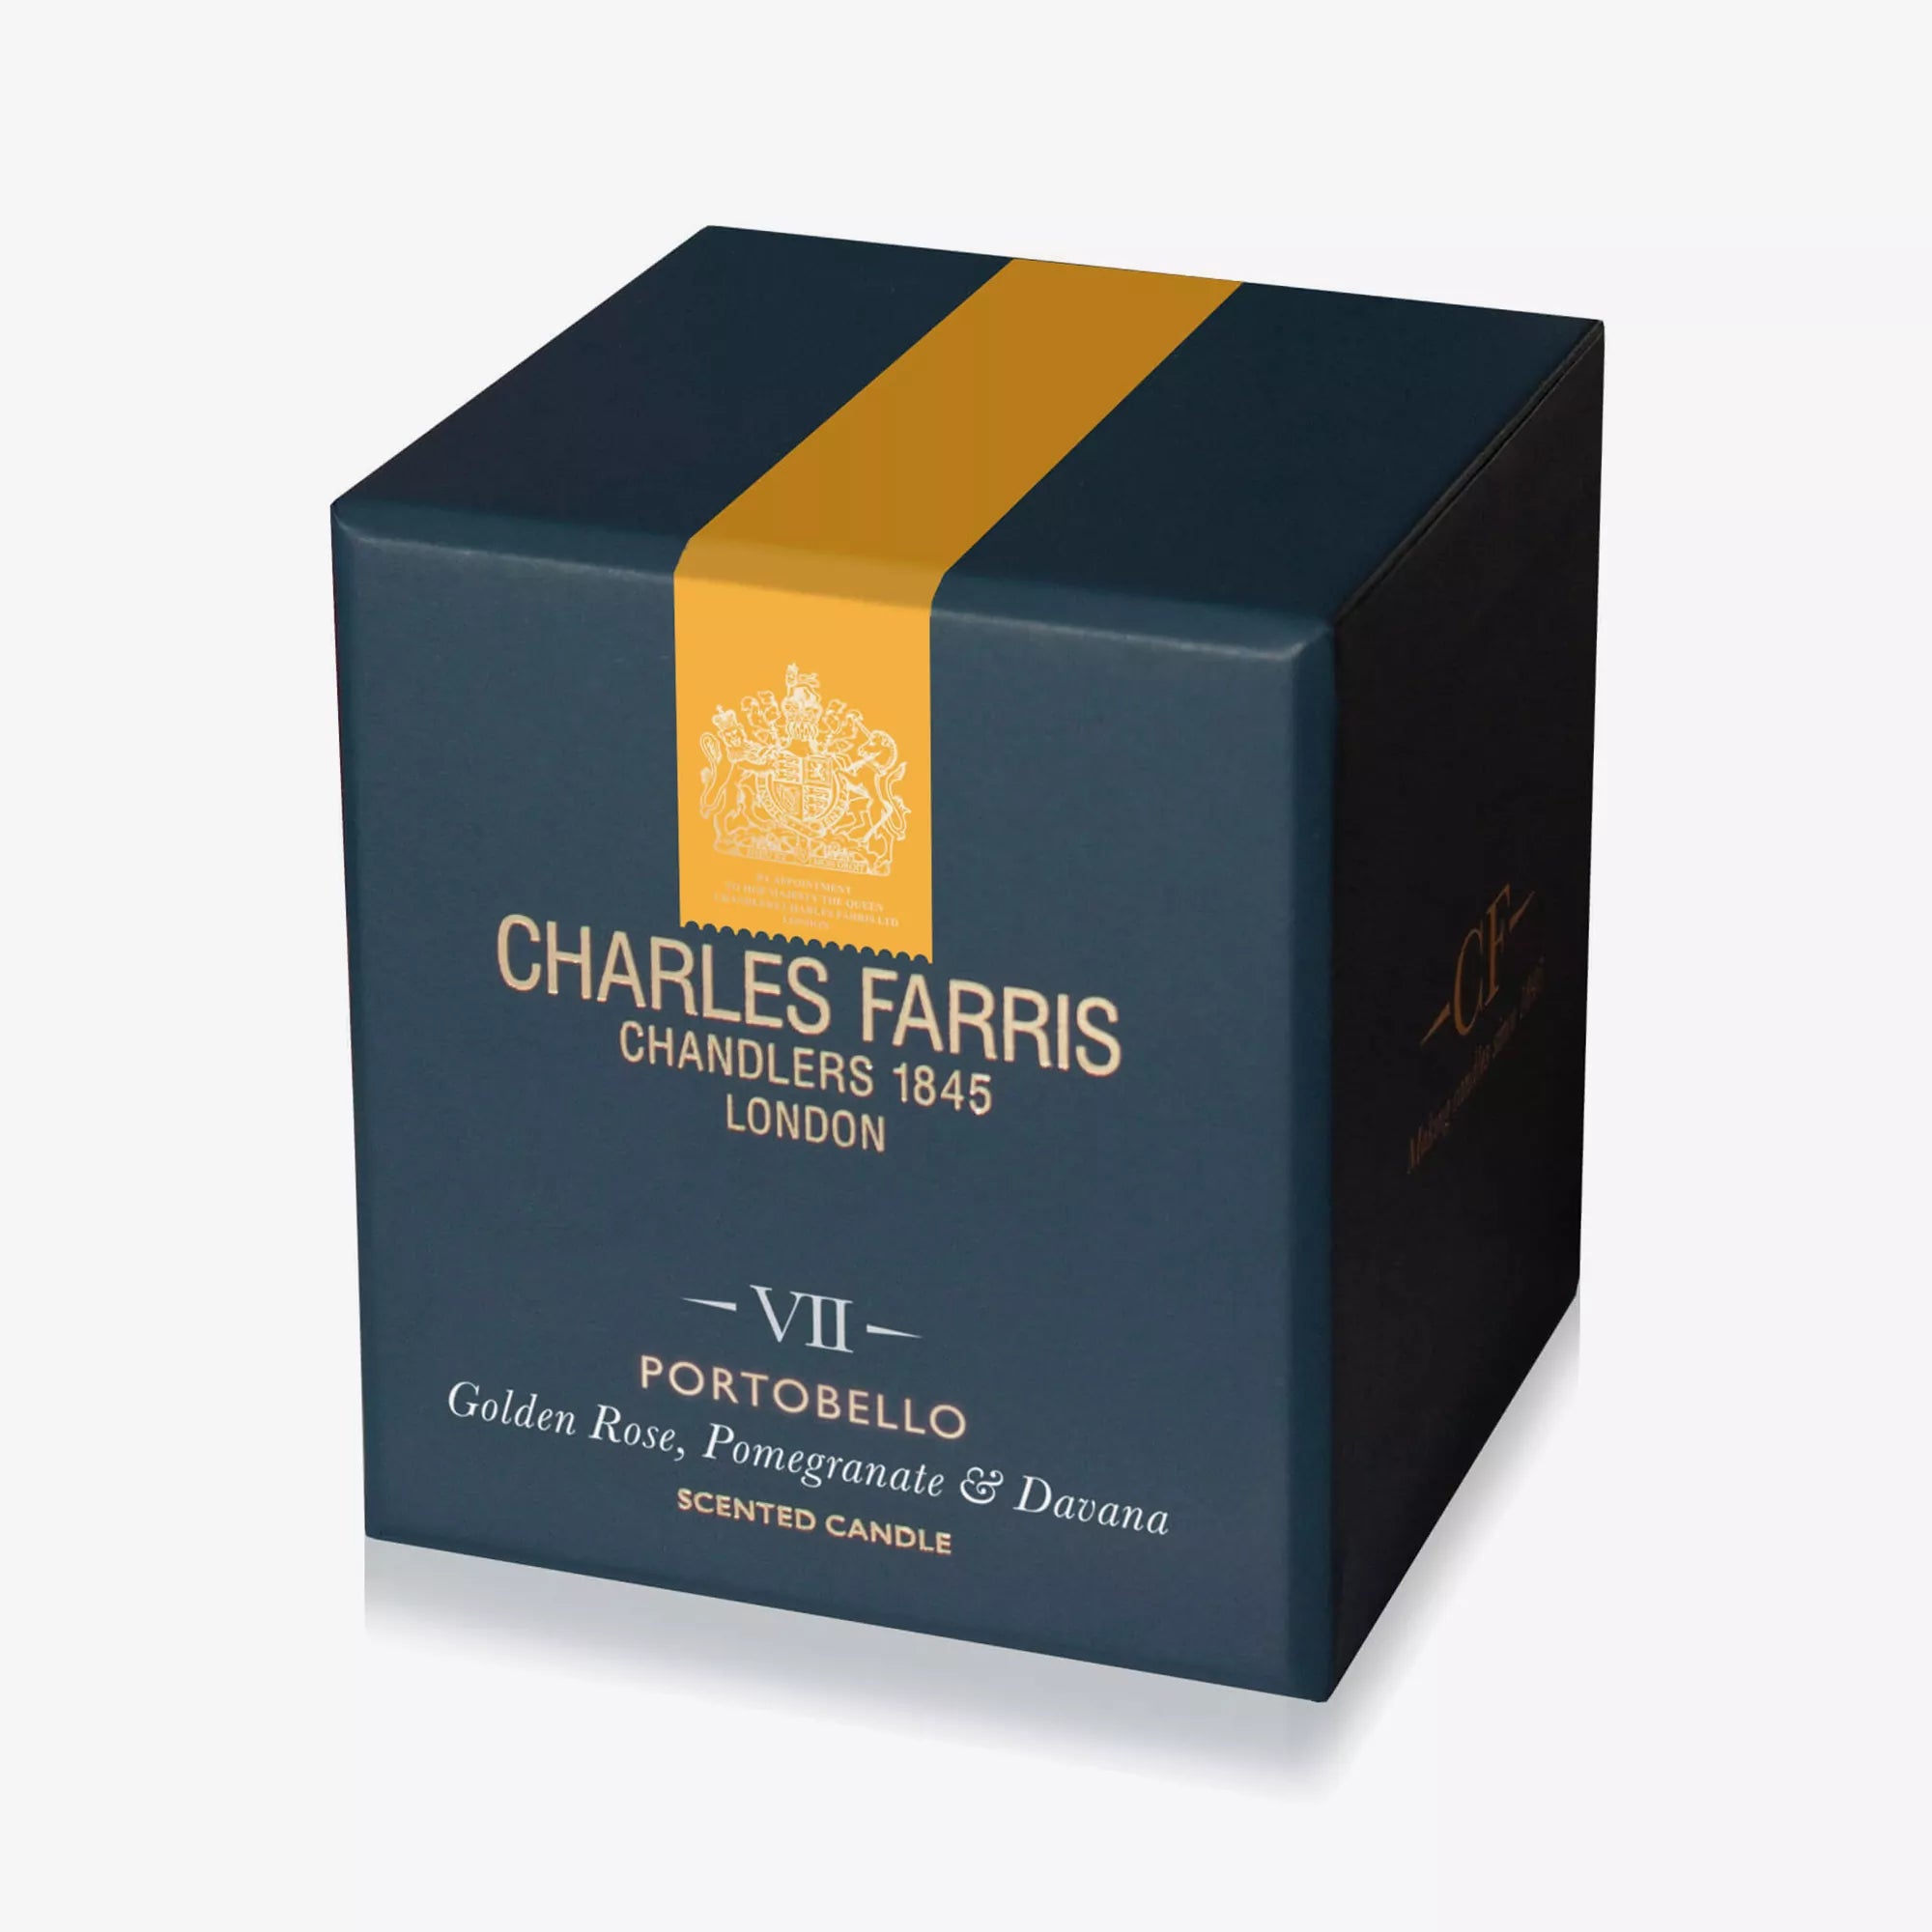 Charles Farris VII Portobello – Scented Candle | Golden Rose, Pomegranate & Davana